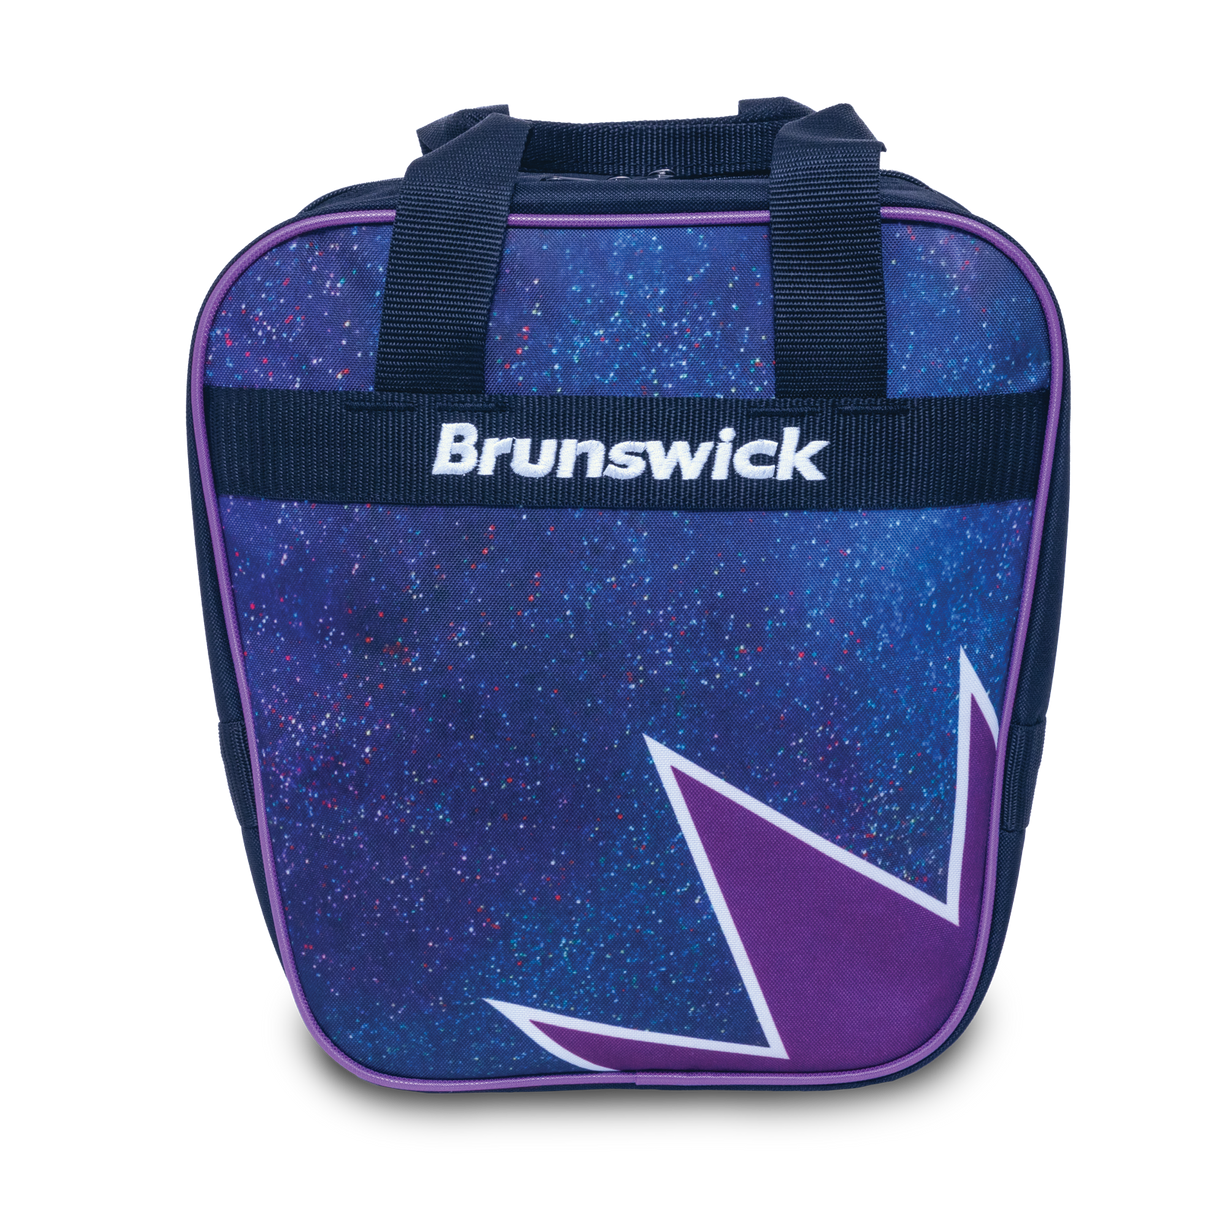 Brunswick Spark 1 Ball Single Tote Deep Space blue and purple Bowling Bag travel suitcase league tournament play sale discount coupon online pba tour